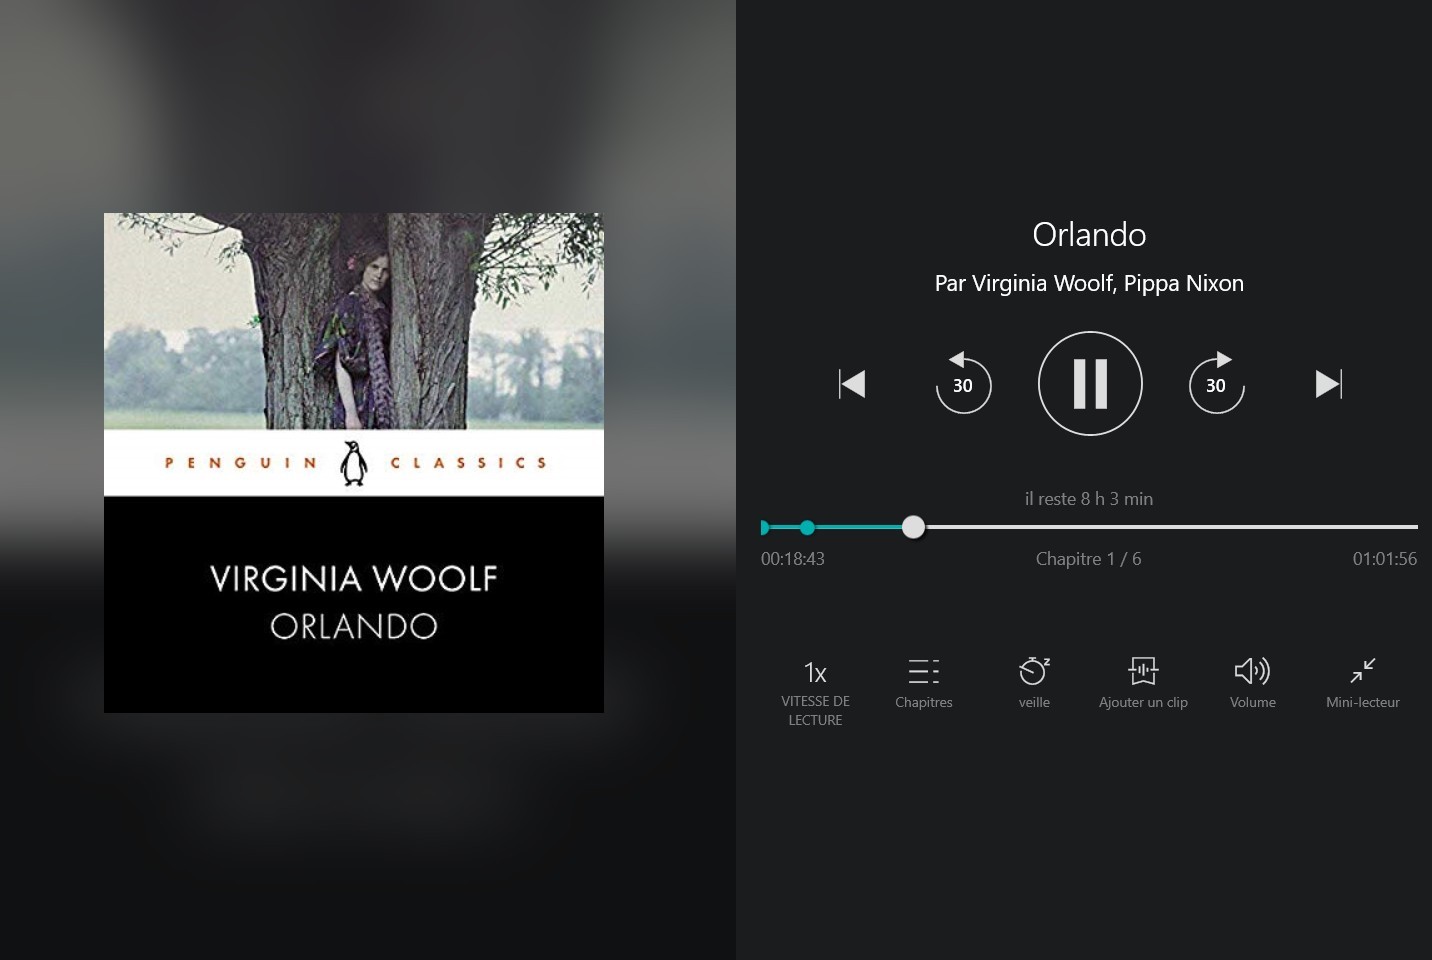 Audiobook: Pippa Nixon reads Orlando | Virginia Woolf | Penguin Audio, 8 hours